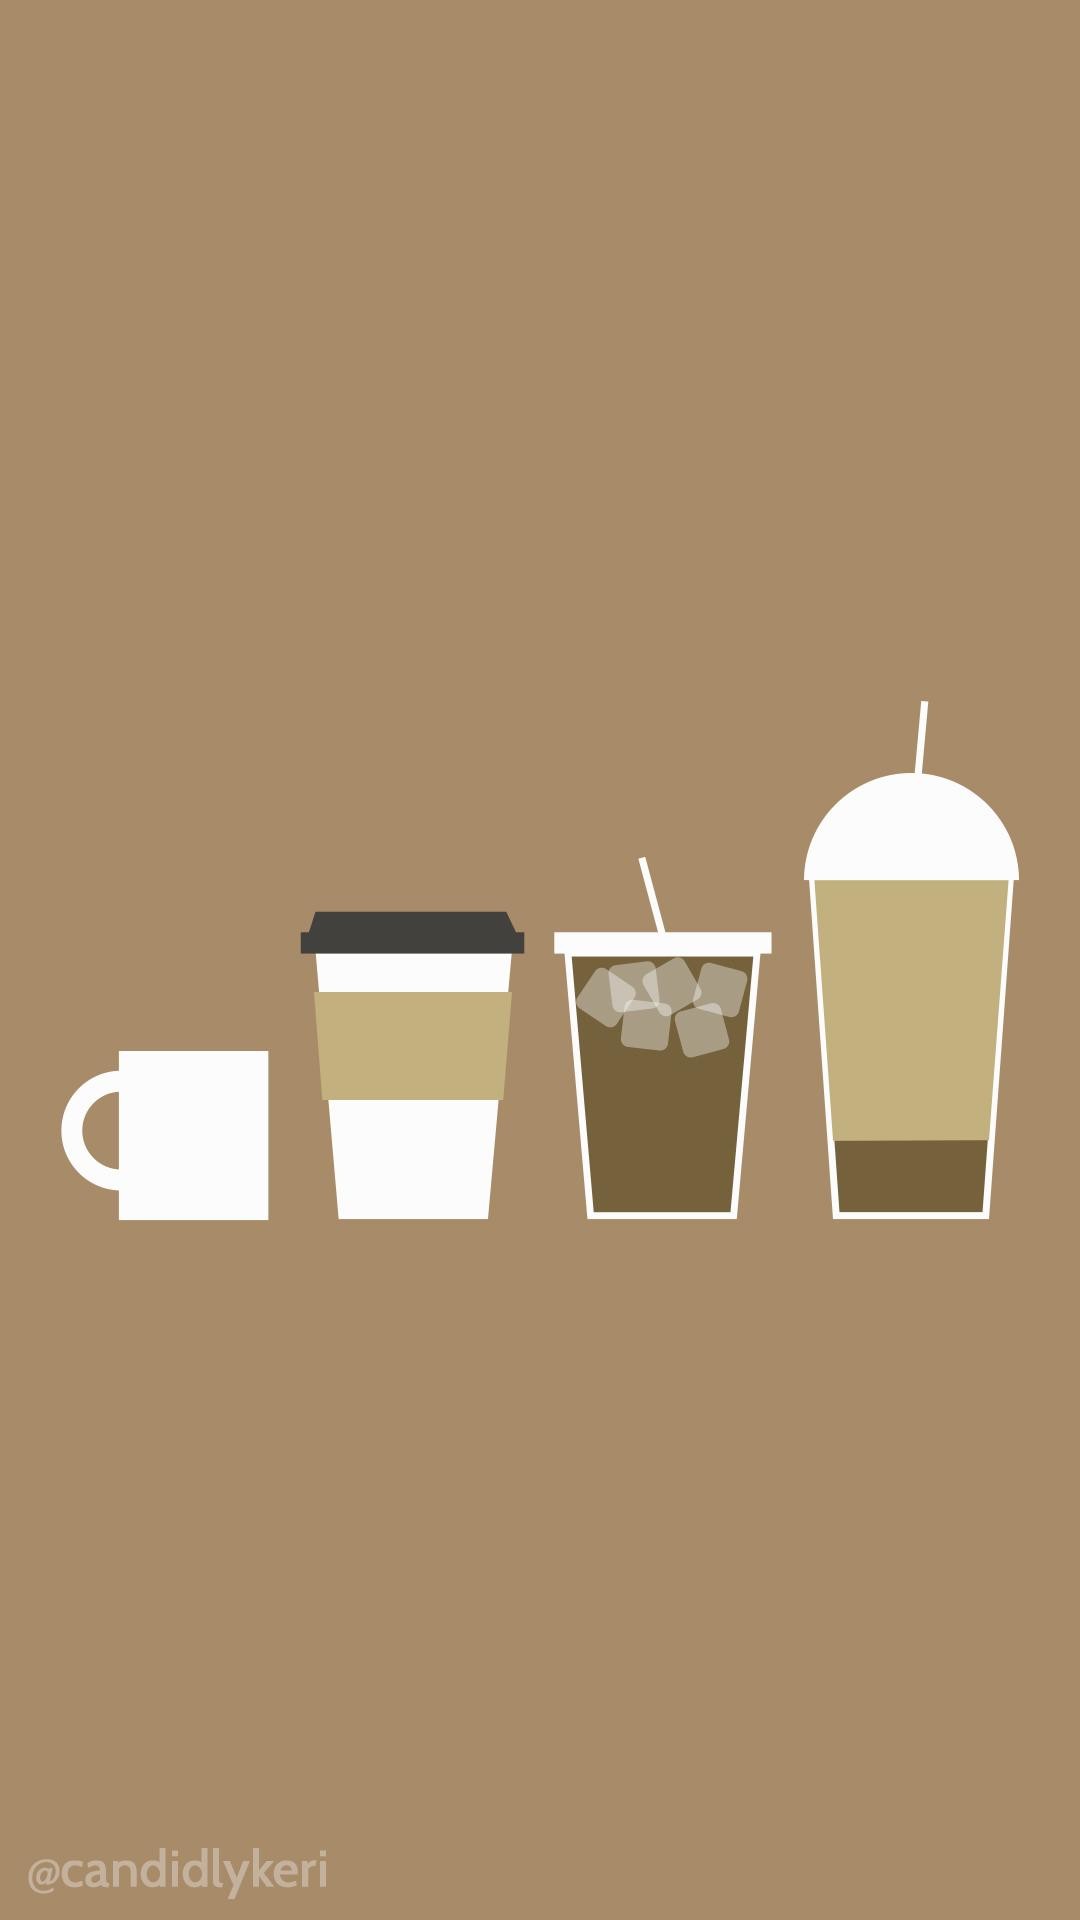 1080x1920 Cute-cartoon-coffee-latte-iced-coffee-you-can-